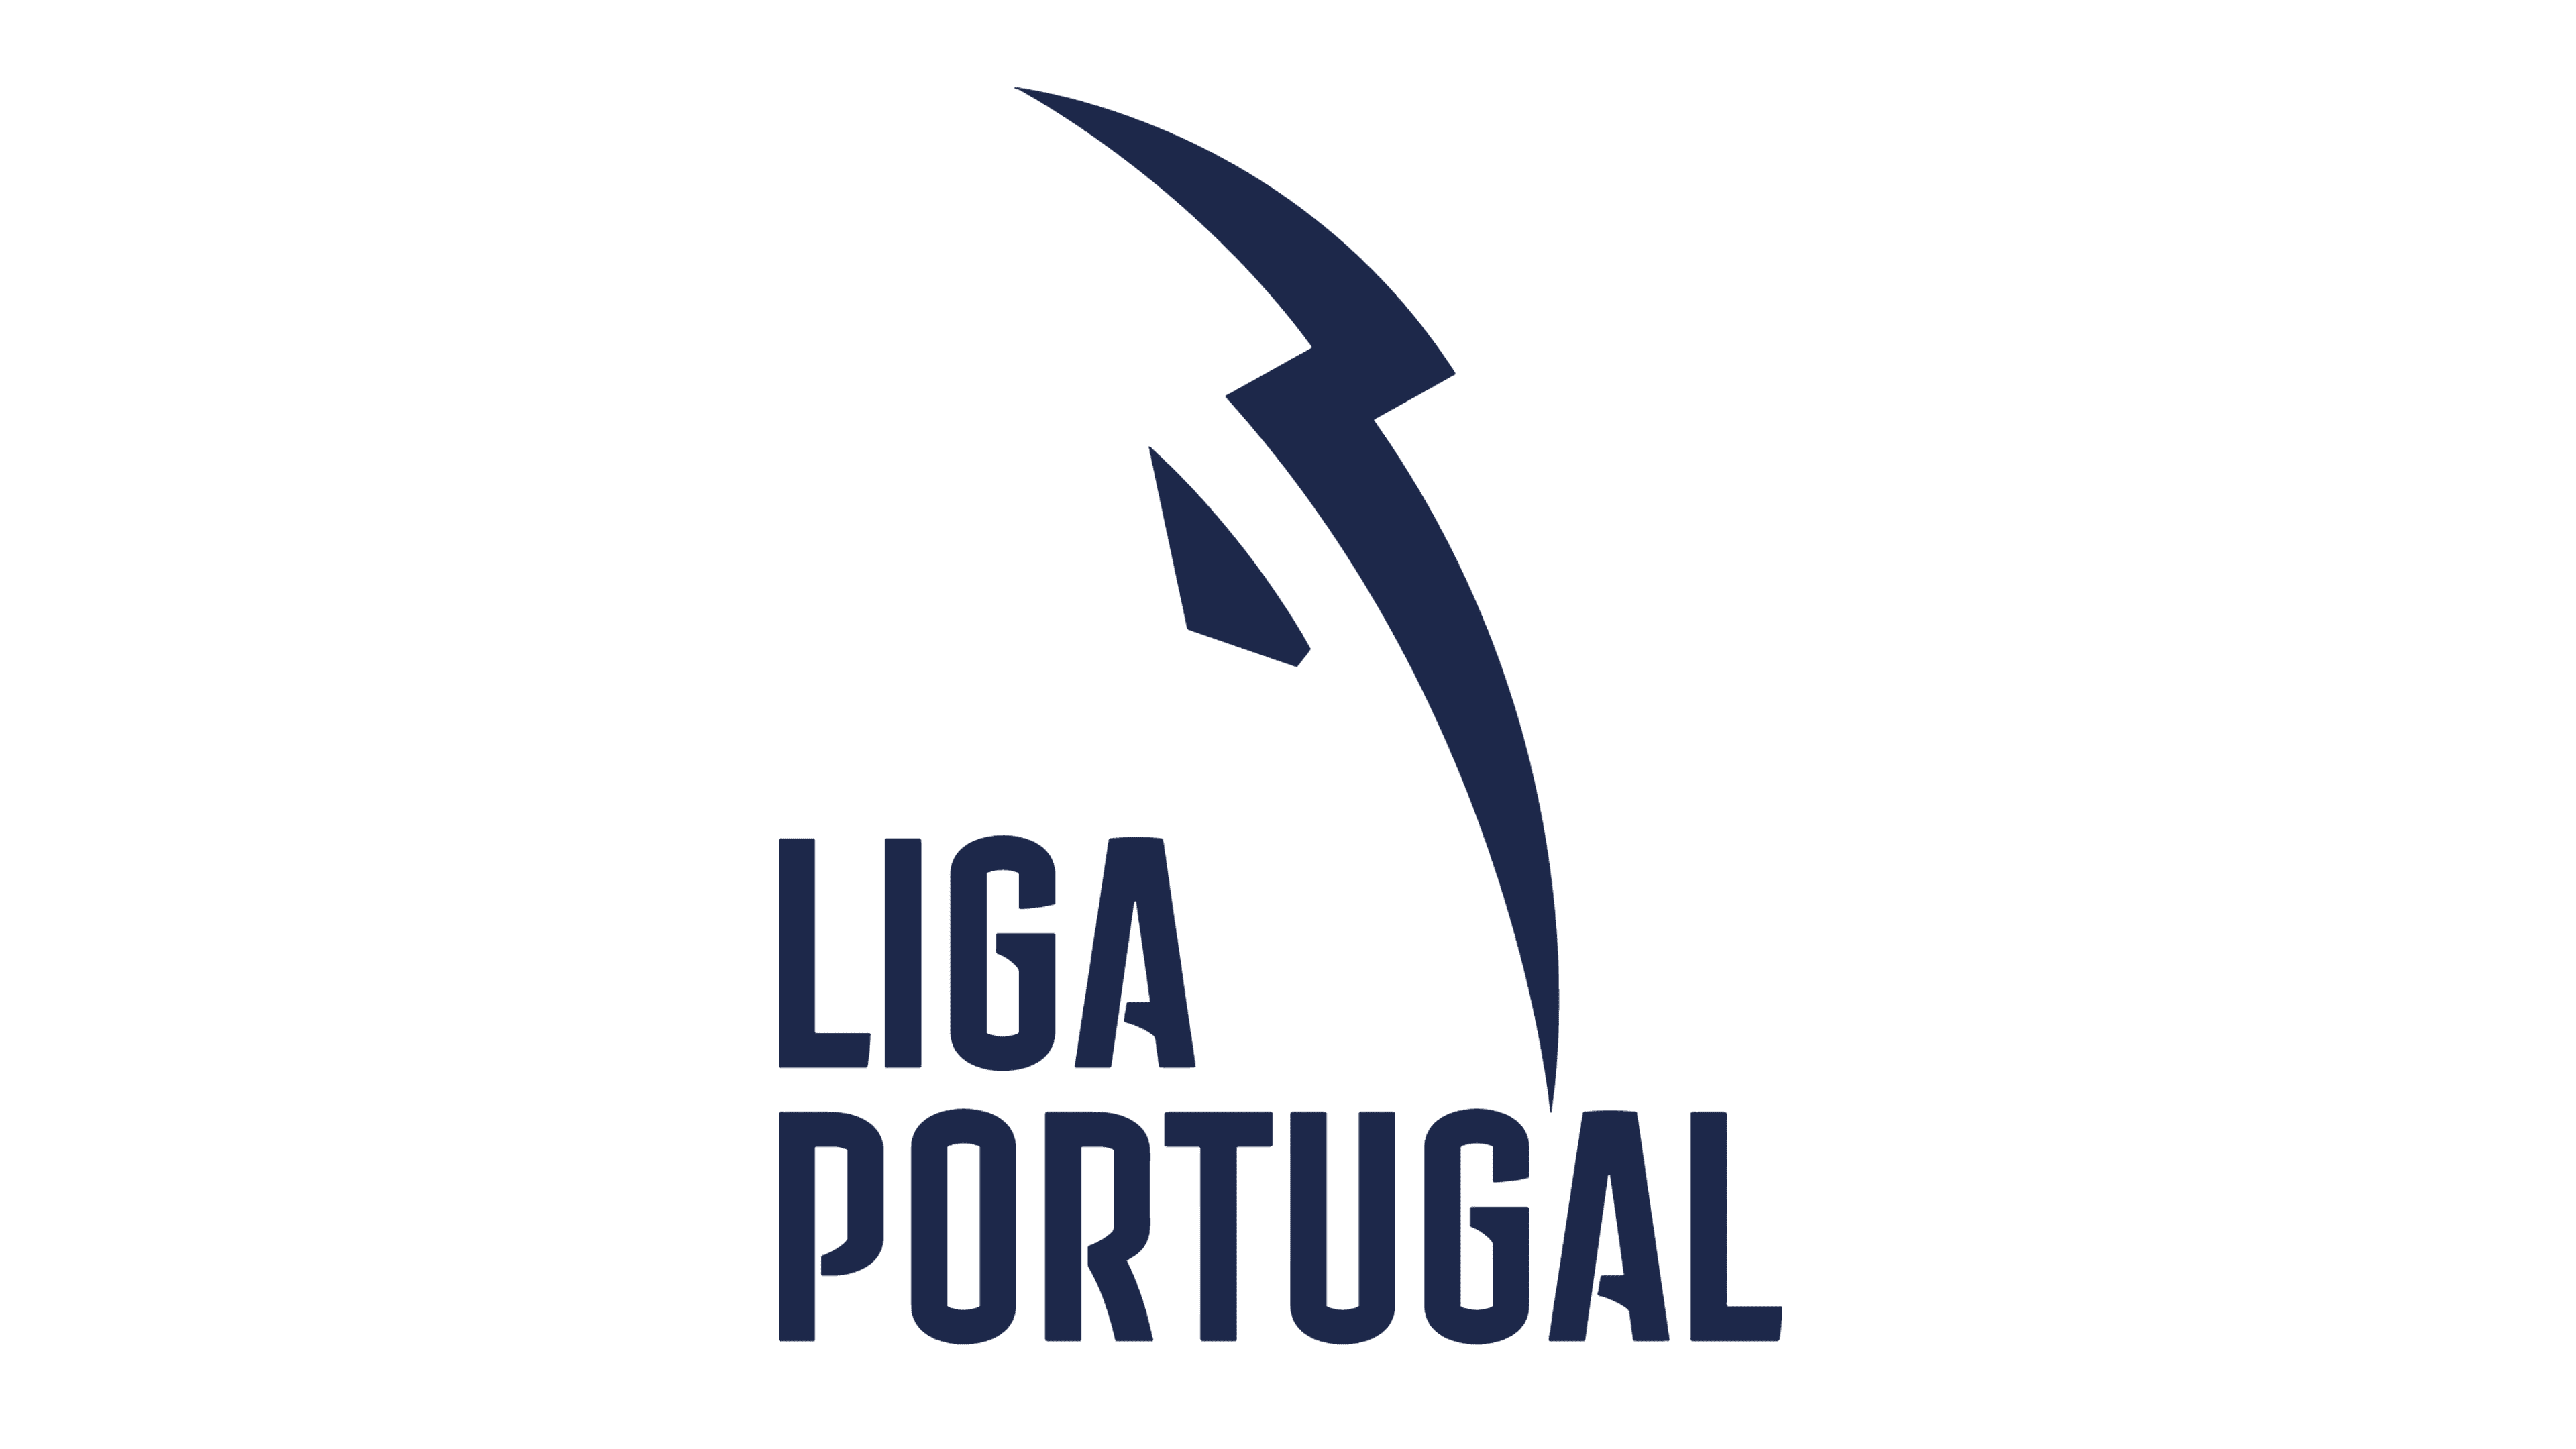 Campeonato Brasileiro Série A logo and symbol, meaning, history